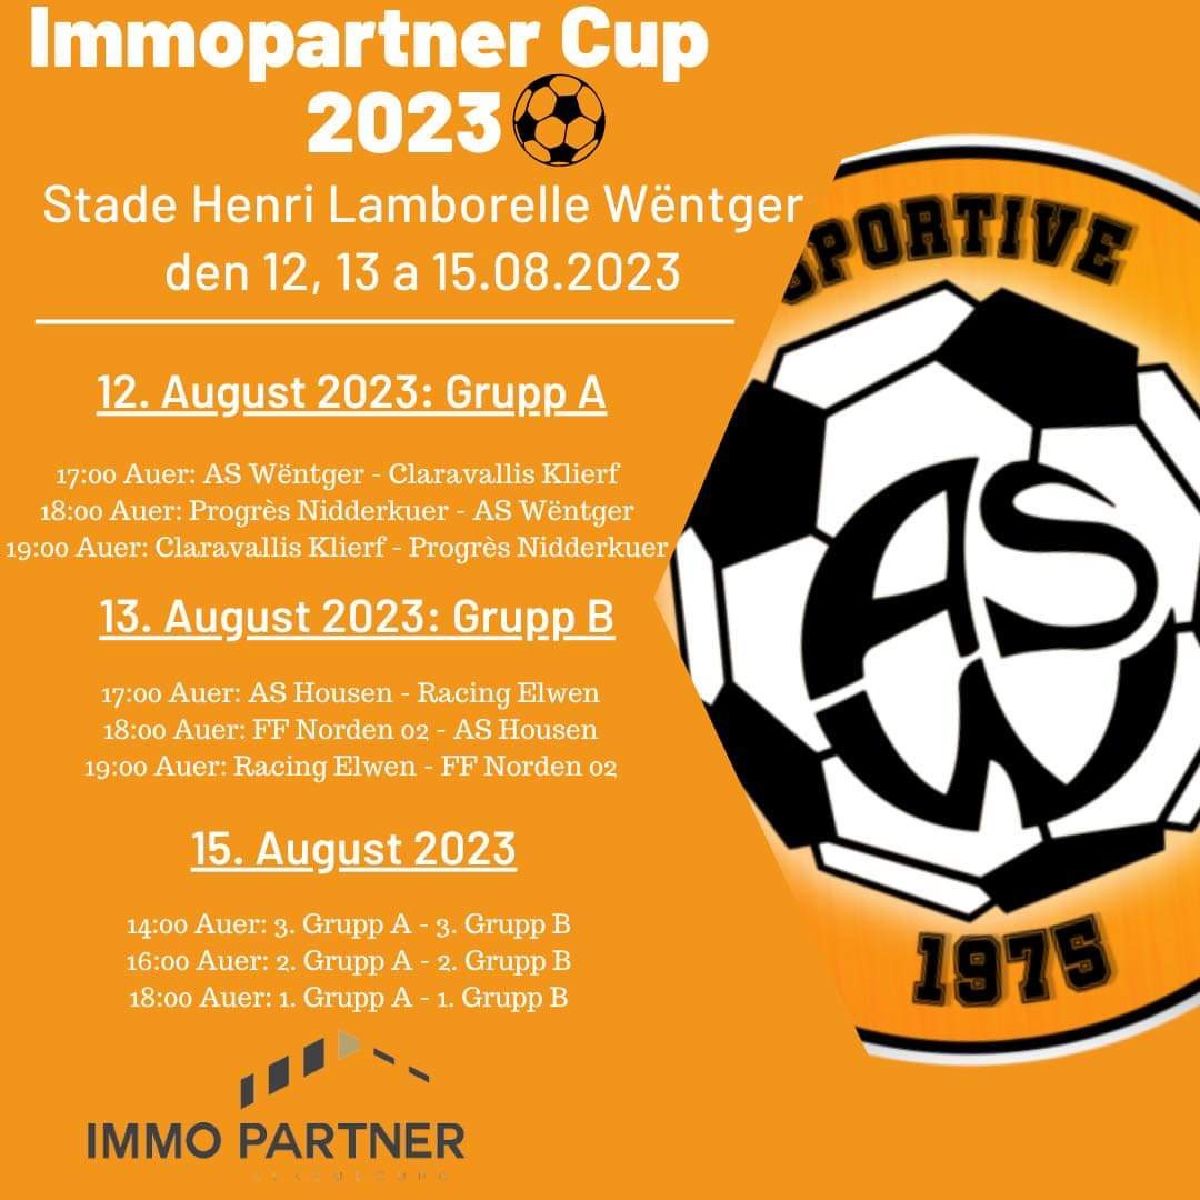 Immopartner Cup 2023